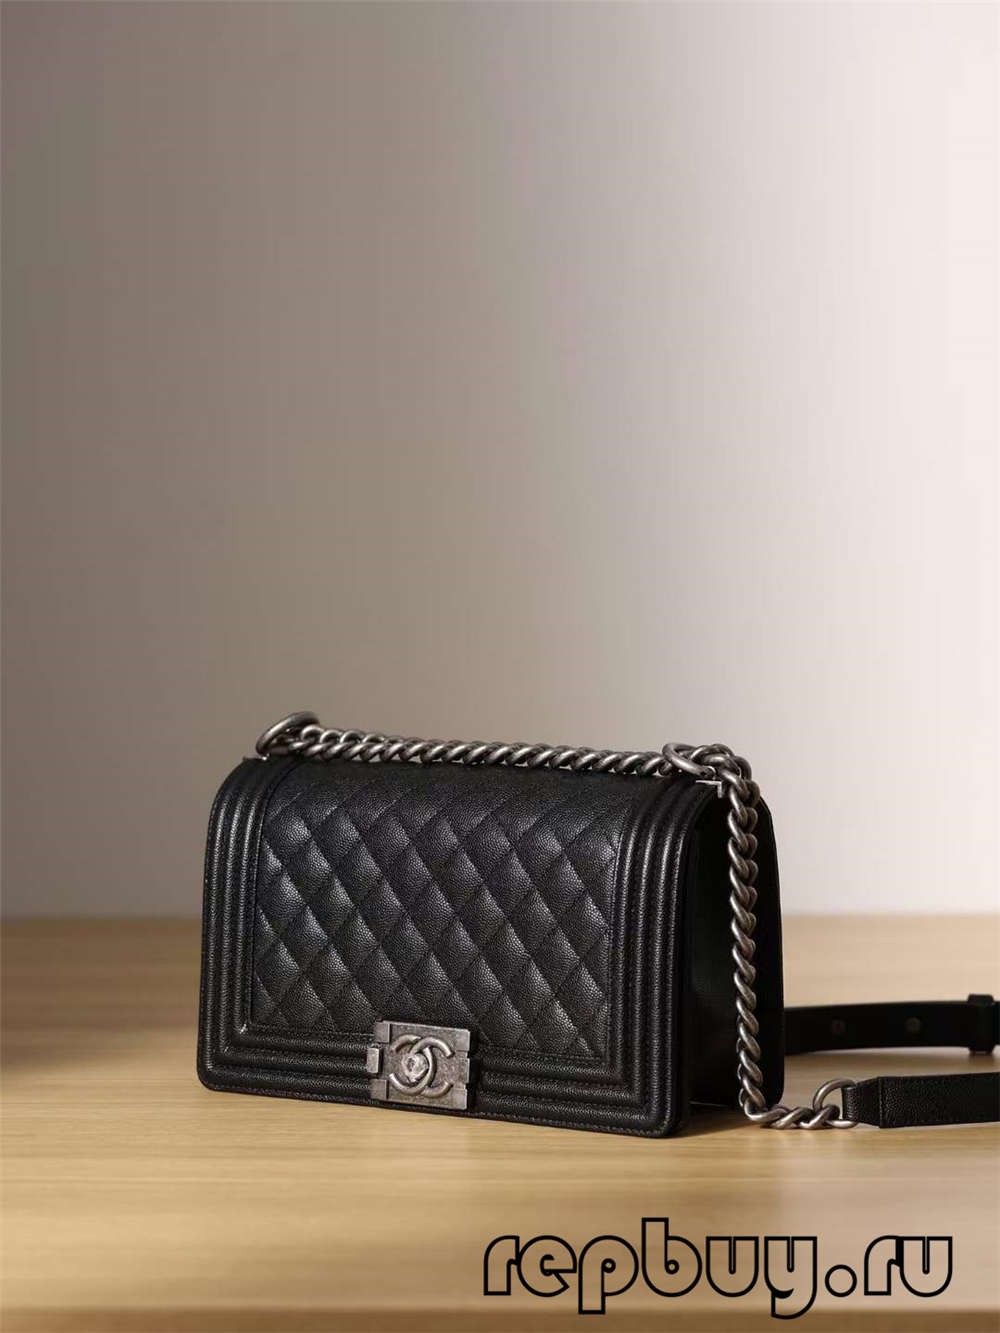 Chanel Le boy medium black top replica handbags Appearance (2022 Updated)-Best Quality Fake designer Bag Review, Replica designer bag ru